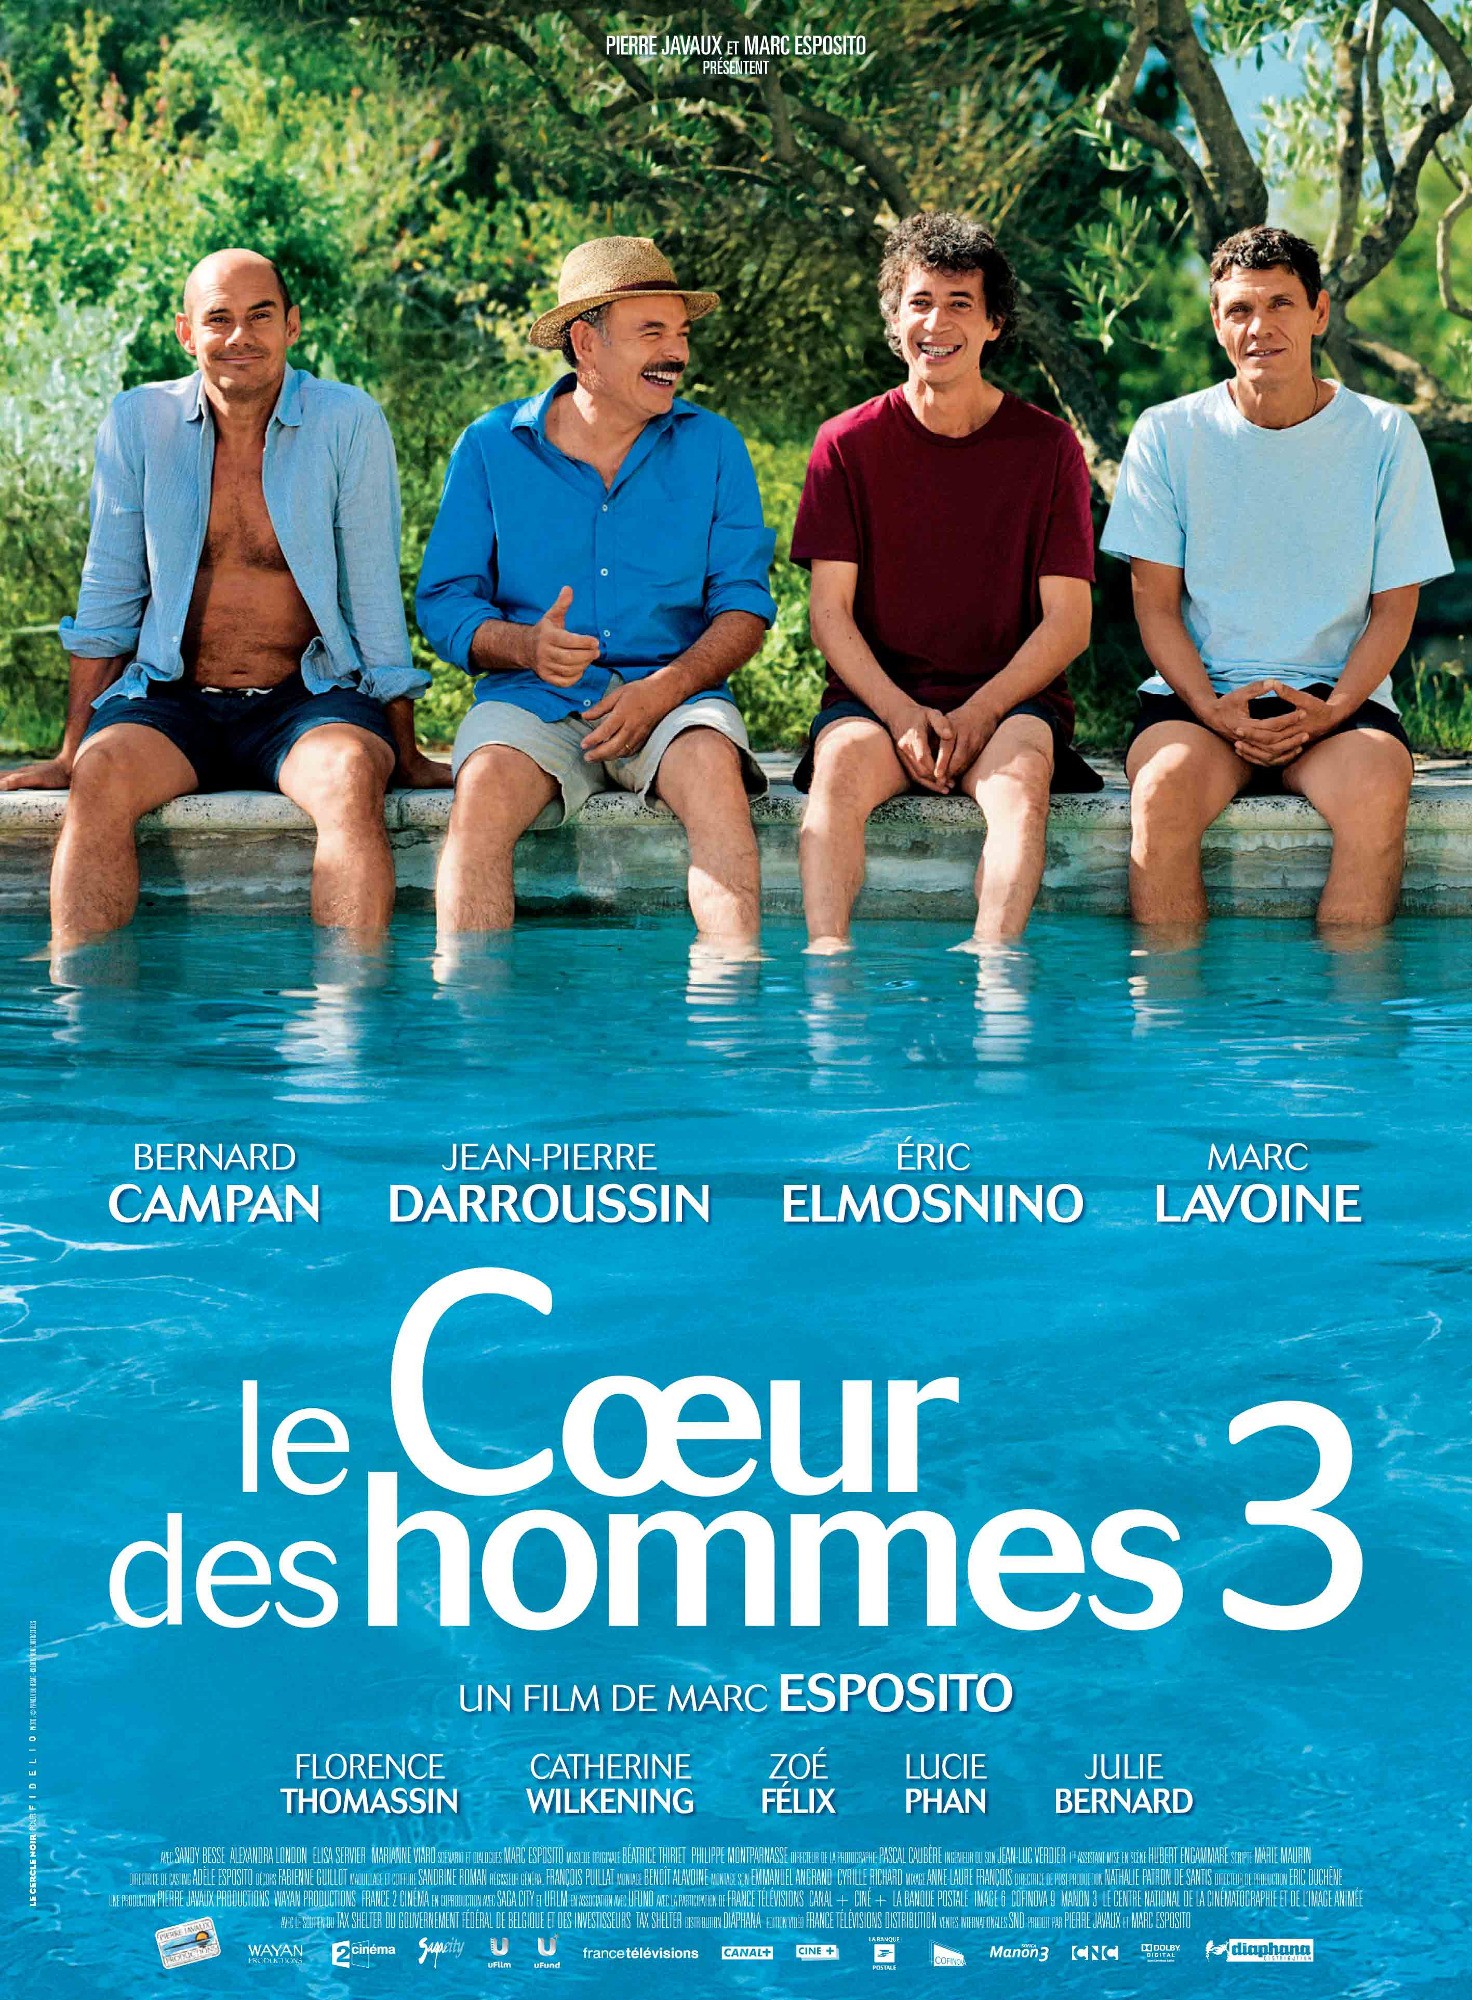 Mega Sized Movie Poster Image for Le coeur des hommes 3 